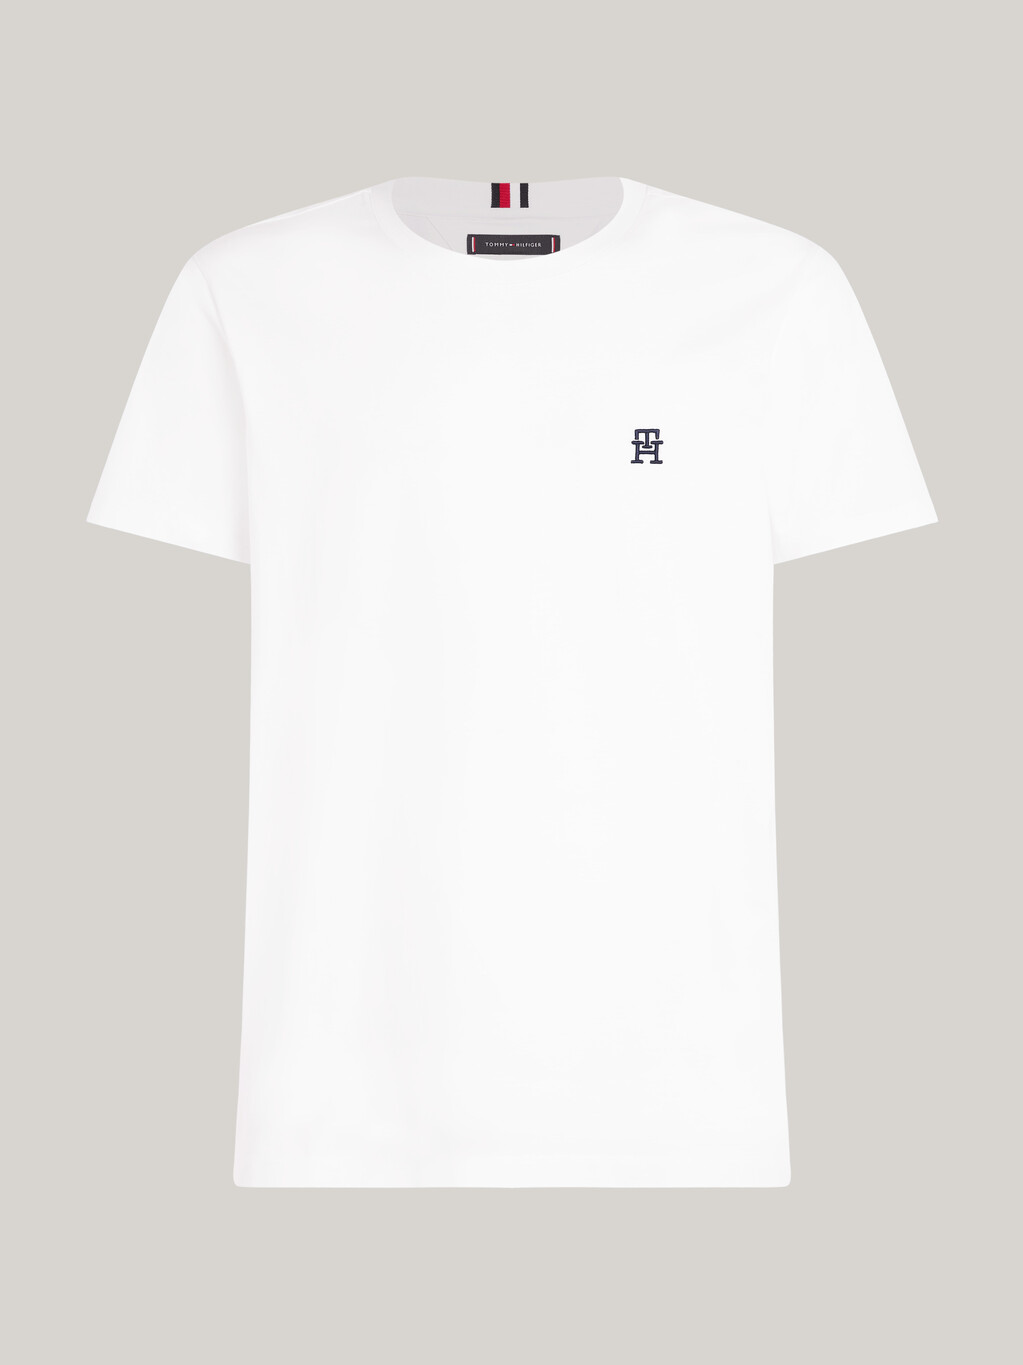 TH Monogram T-Shirt, White, hi-res